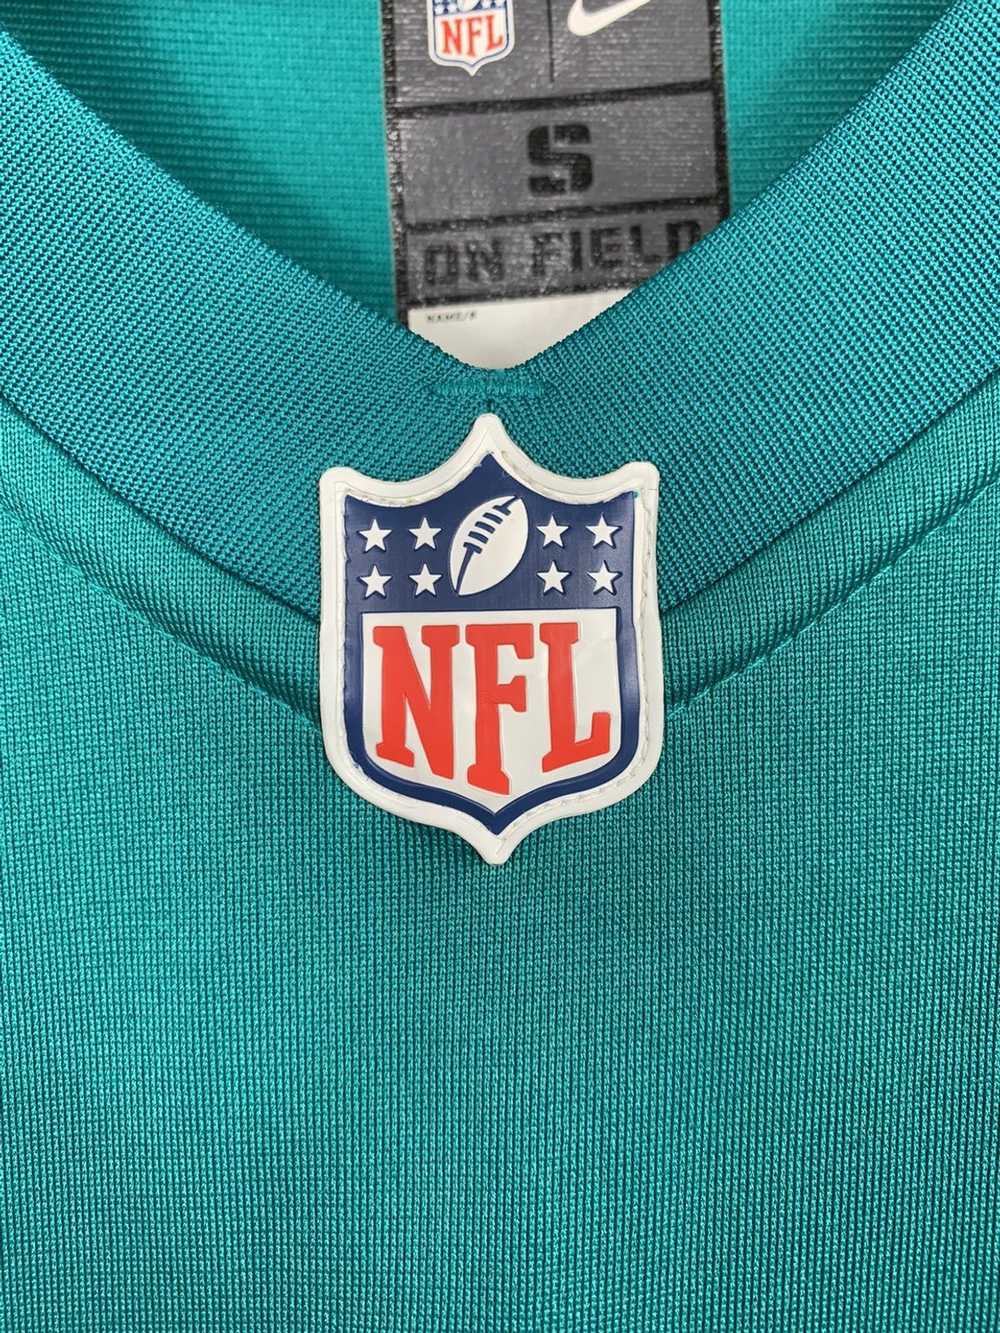 Jersey × NFL × Nike Nike Miami Dolphins t-shirt p… - image 11